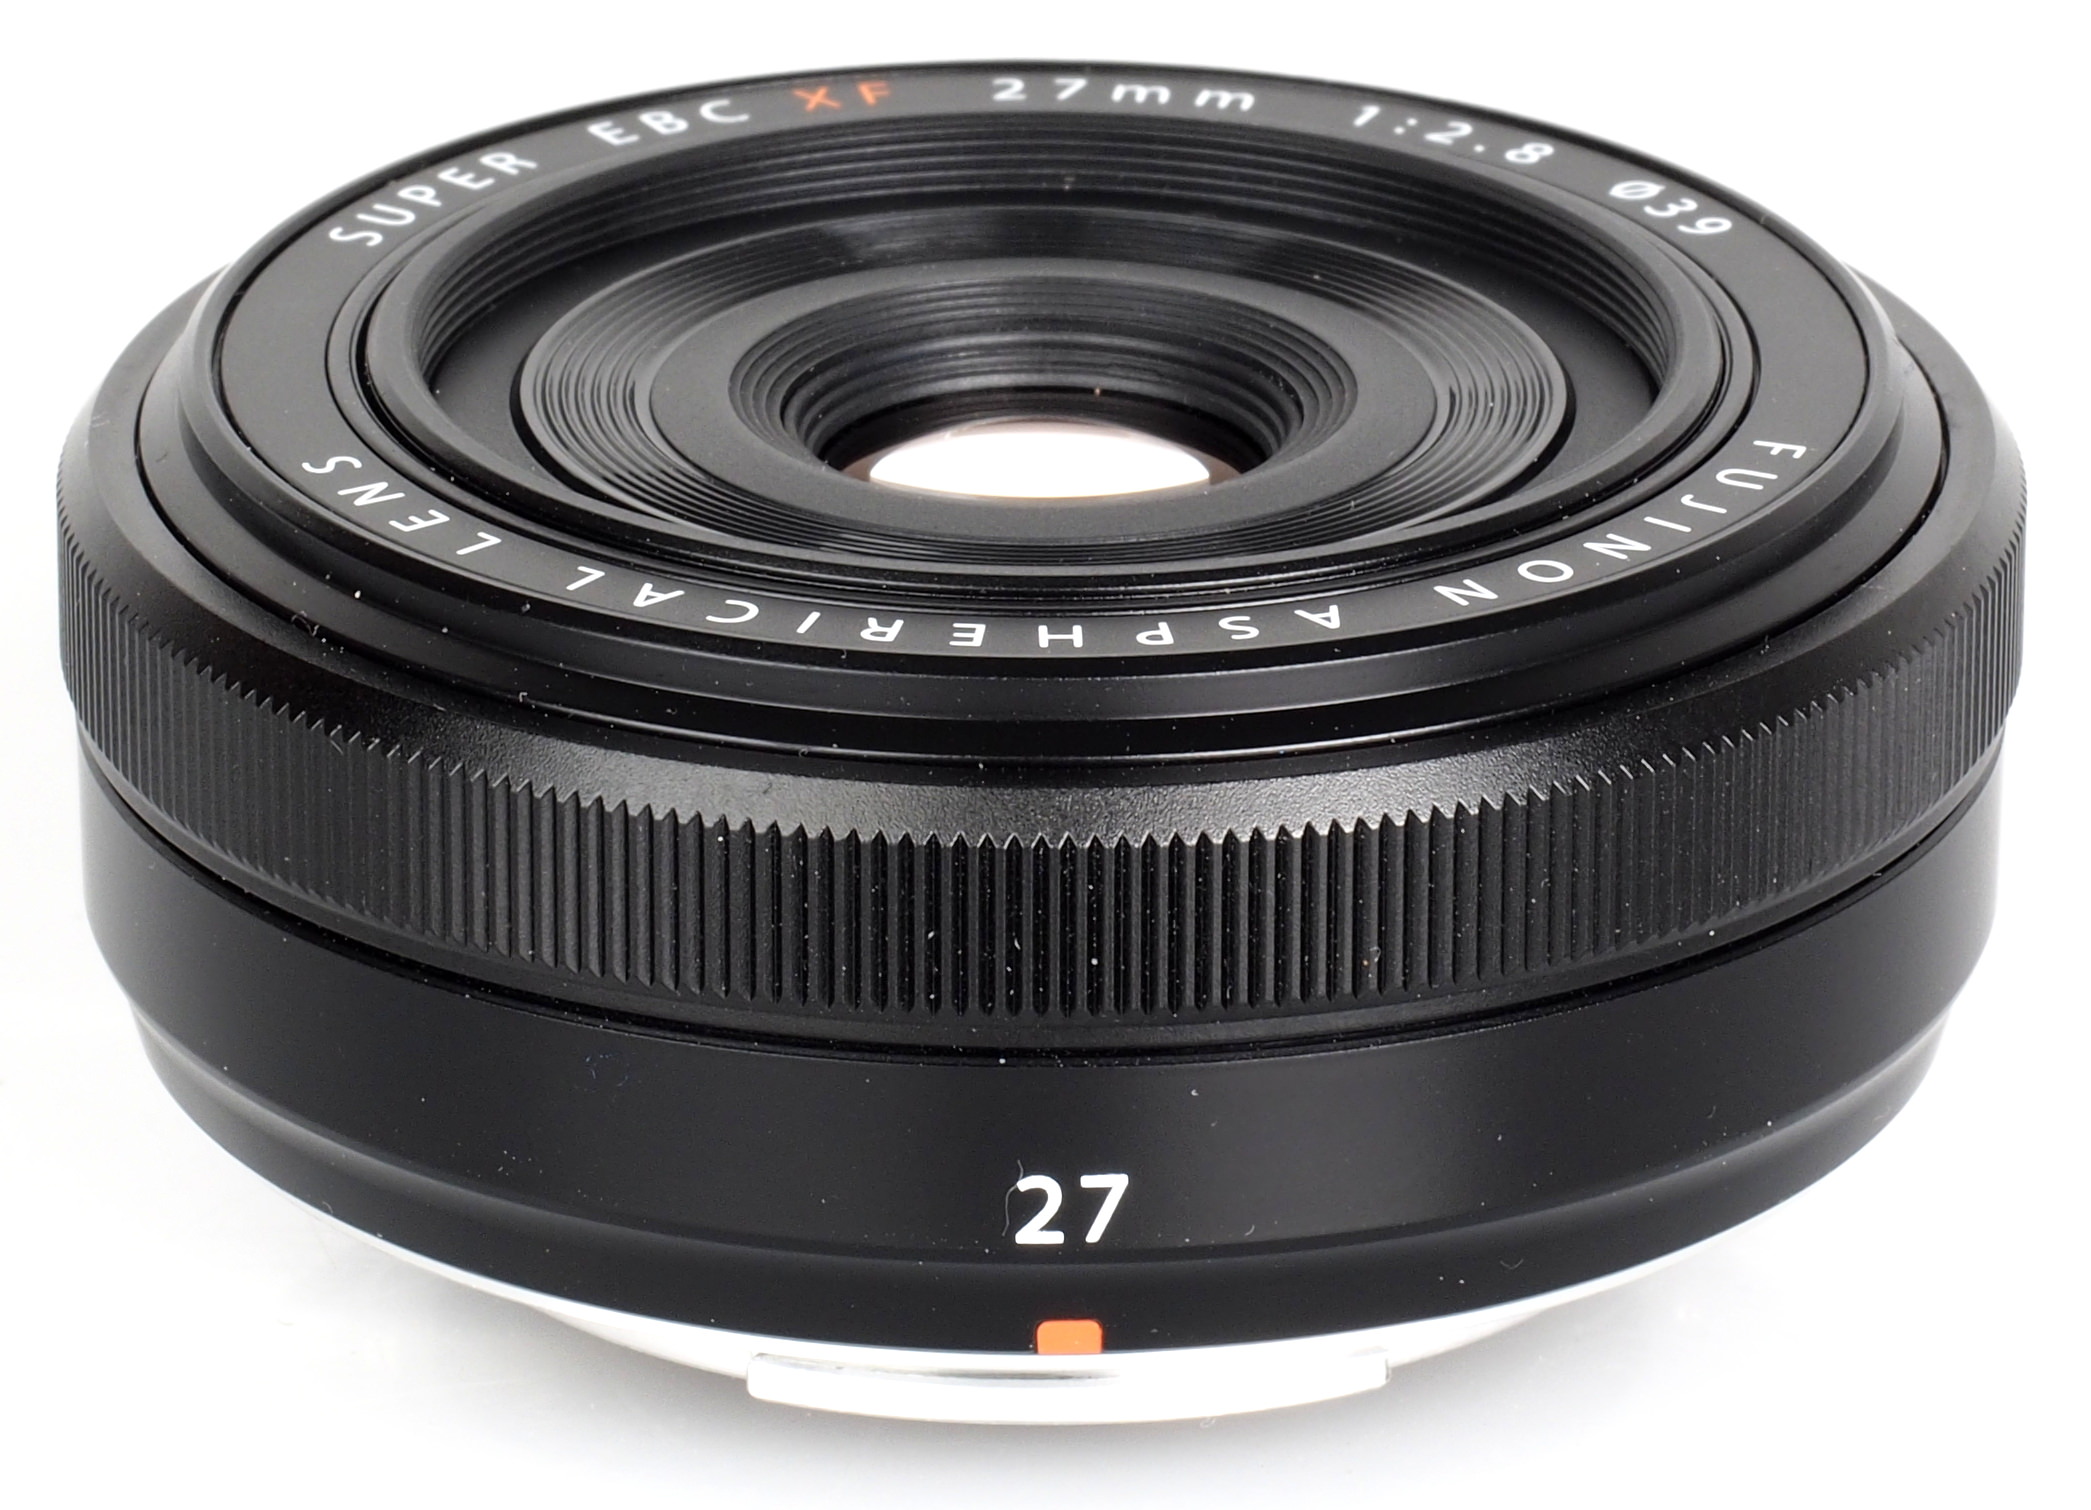 Fujifilm Fujinon XF 27mm f/2.8 Lens Review ePHOTOzine